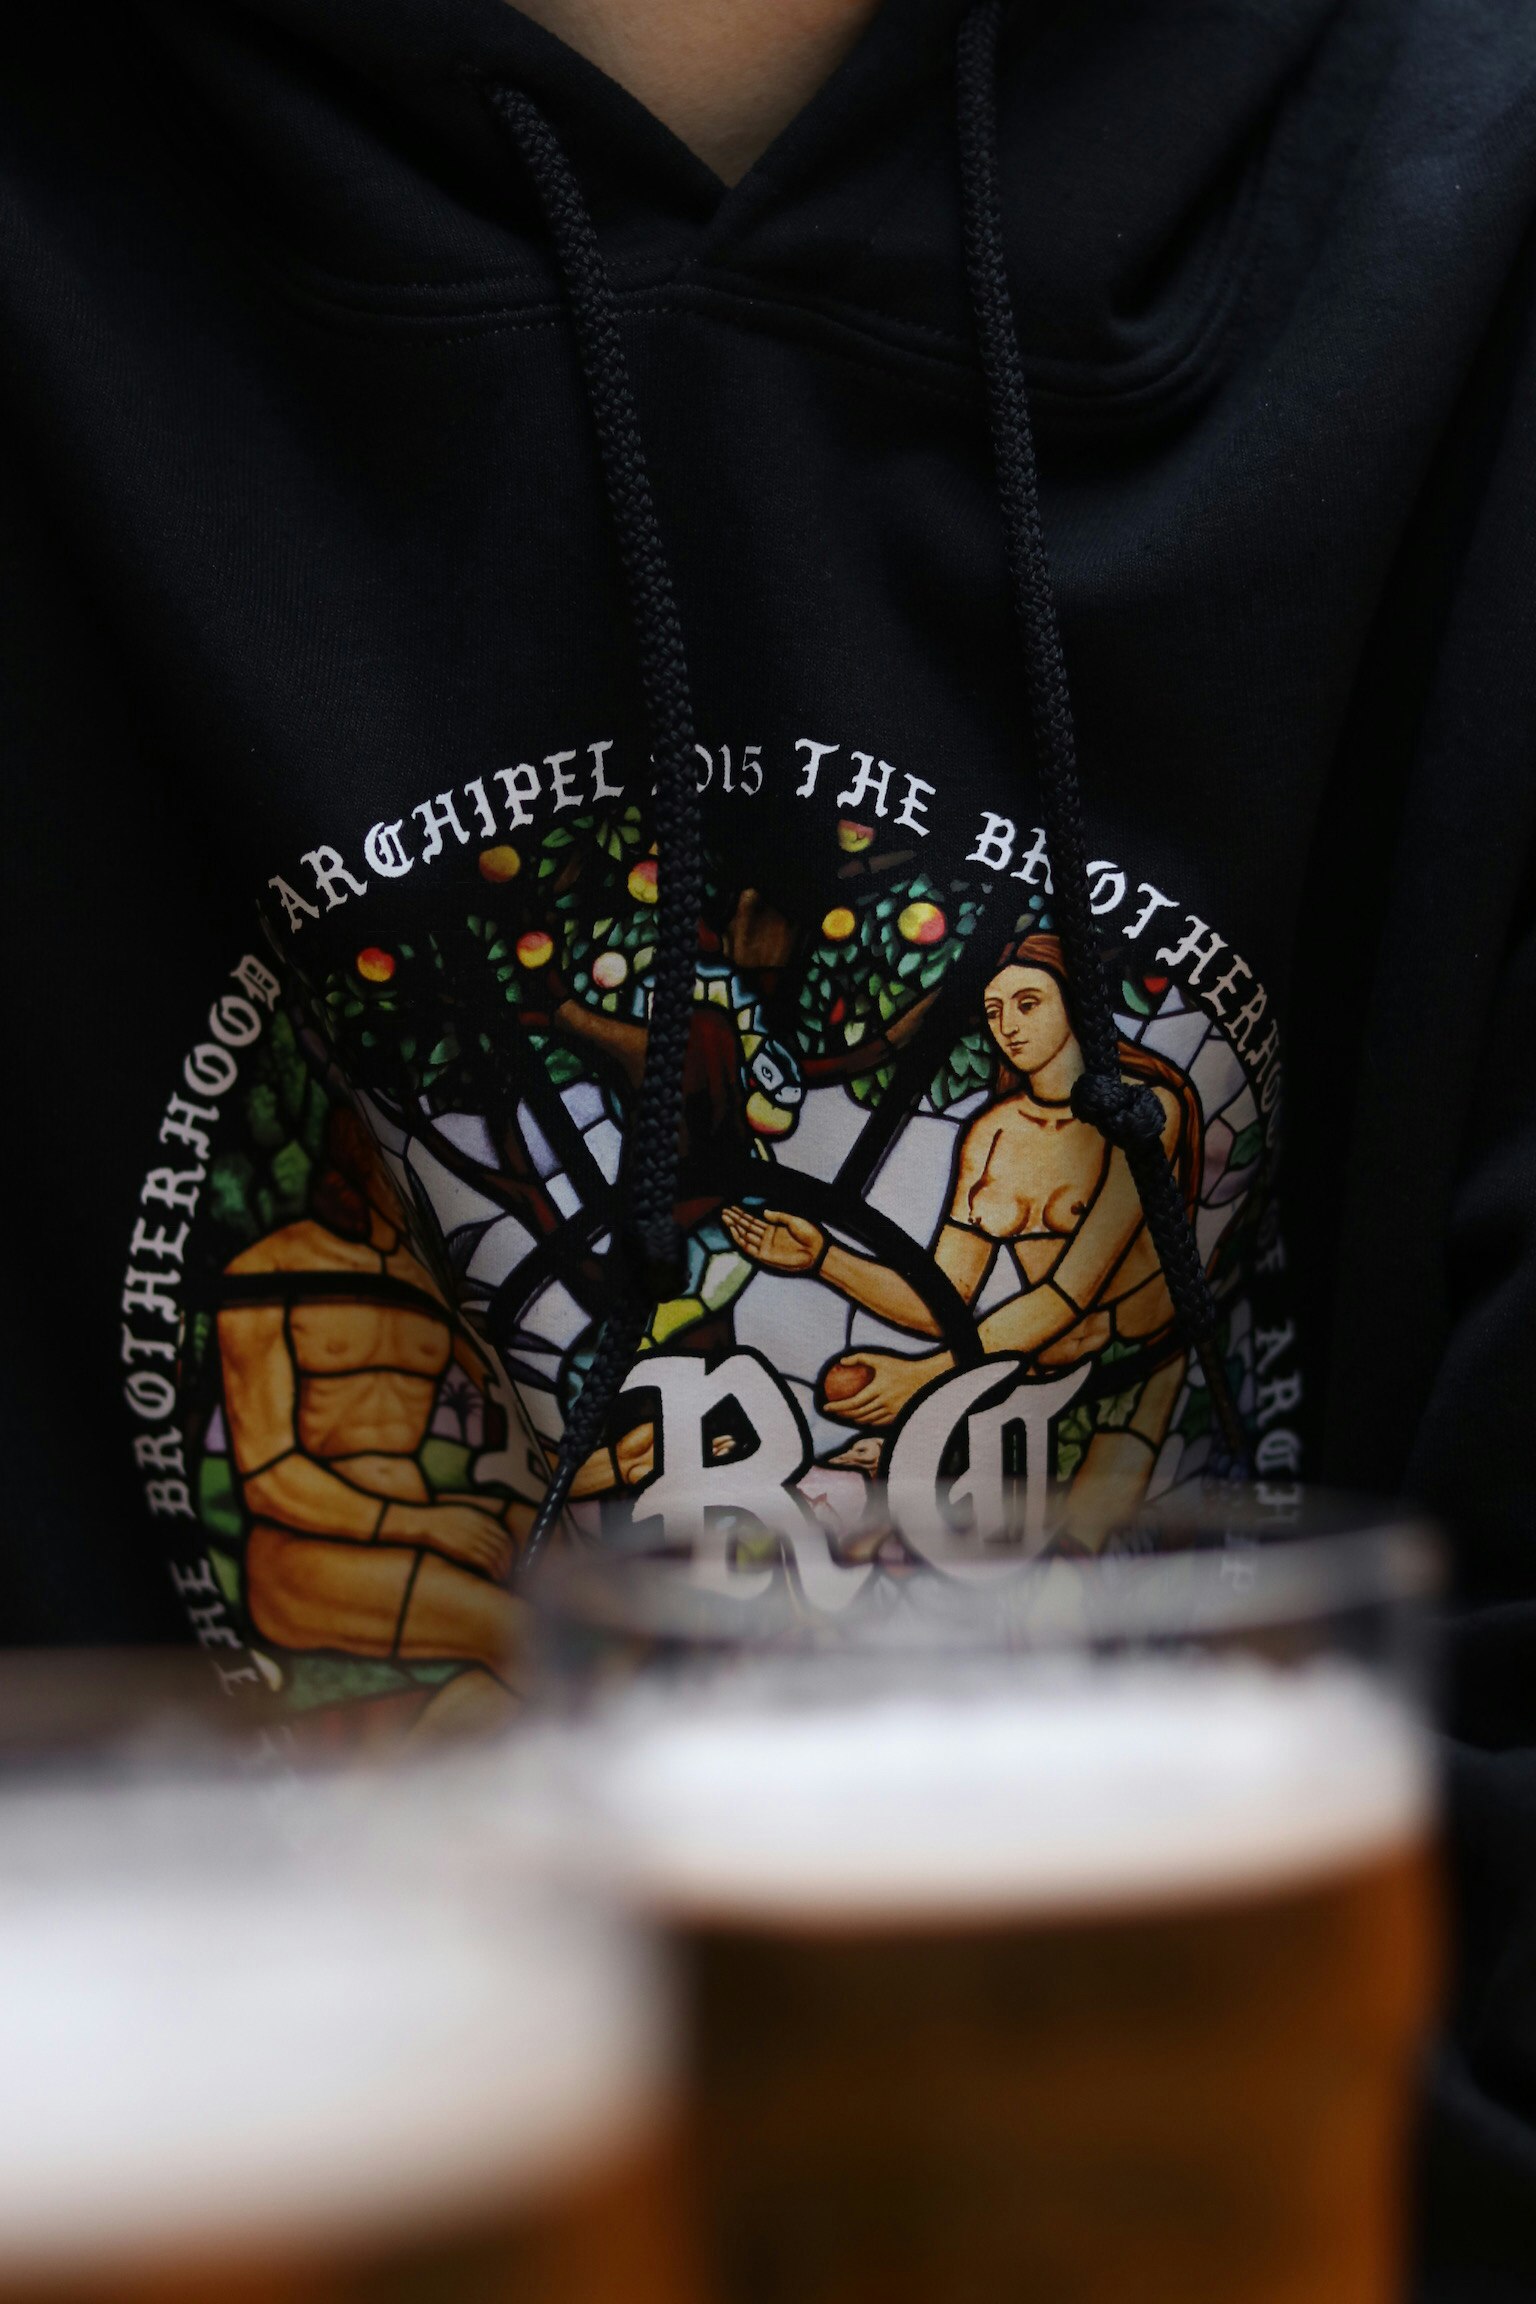 Sun 18 - Cider, Beer and God